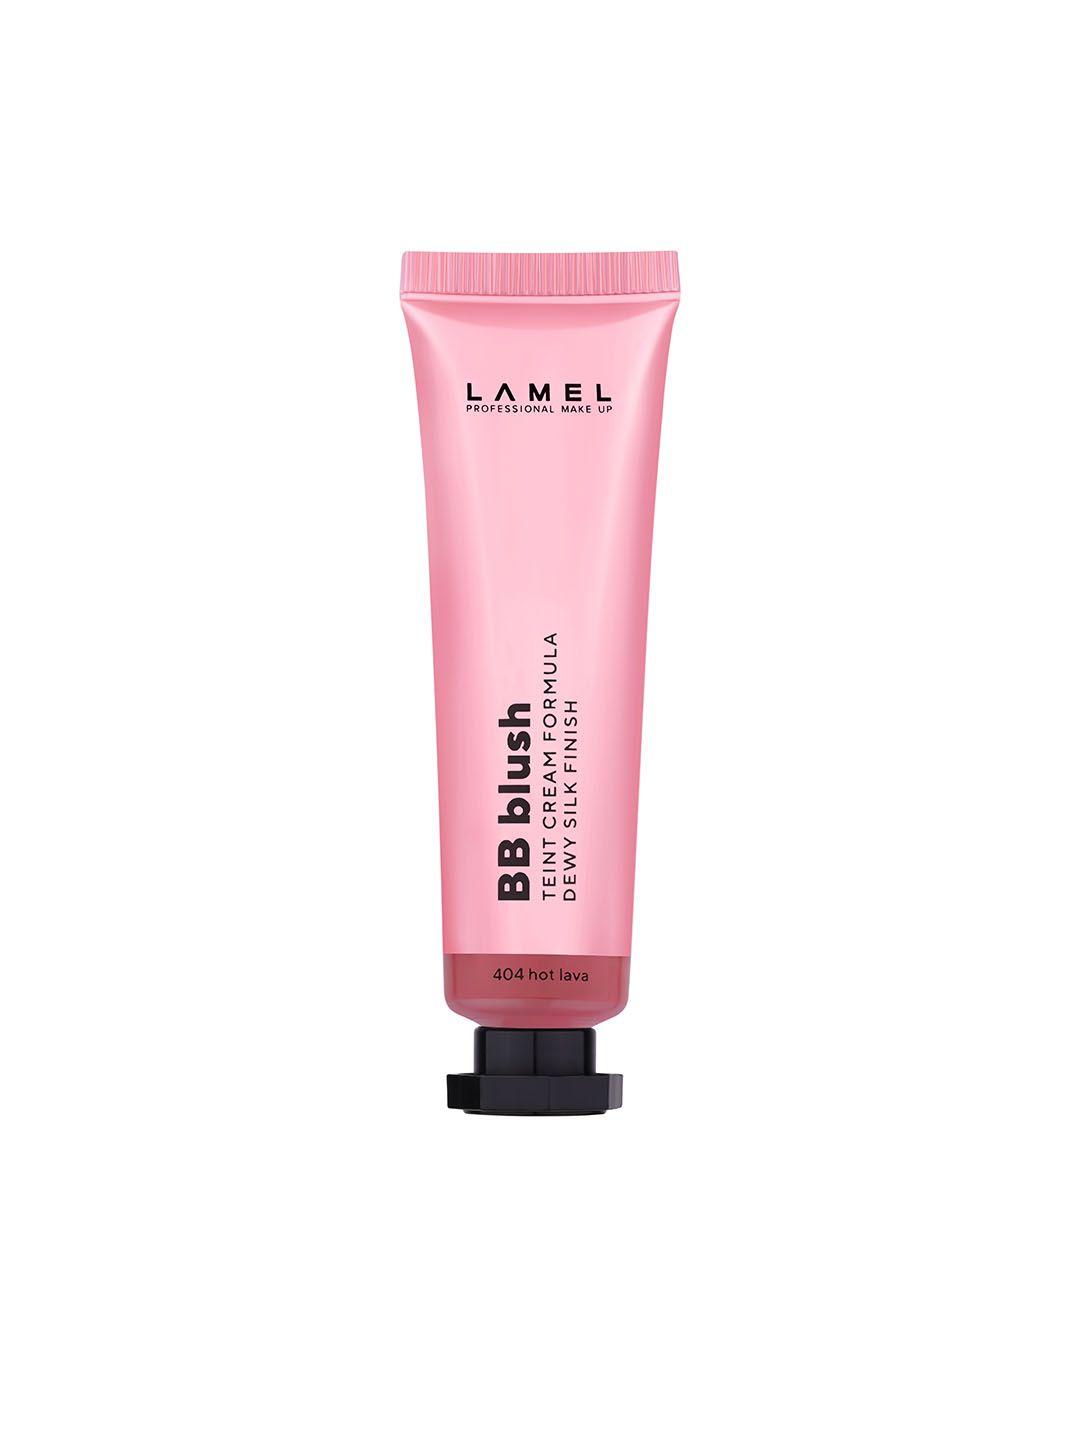 lamel dewy cream face bb blush 10ml - hot lava 404